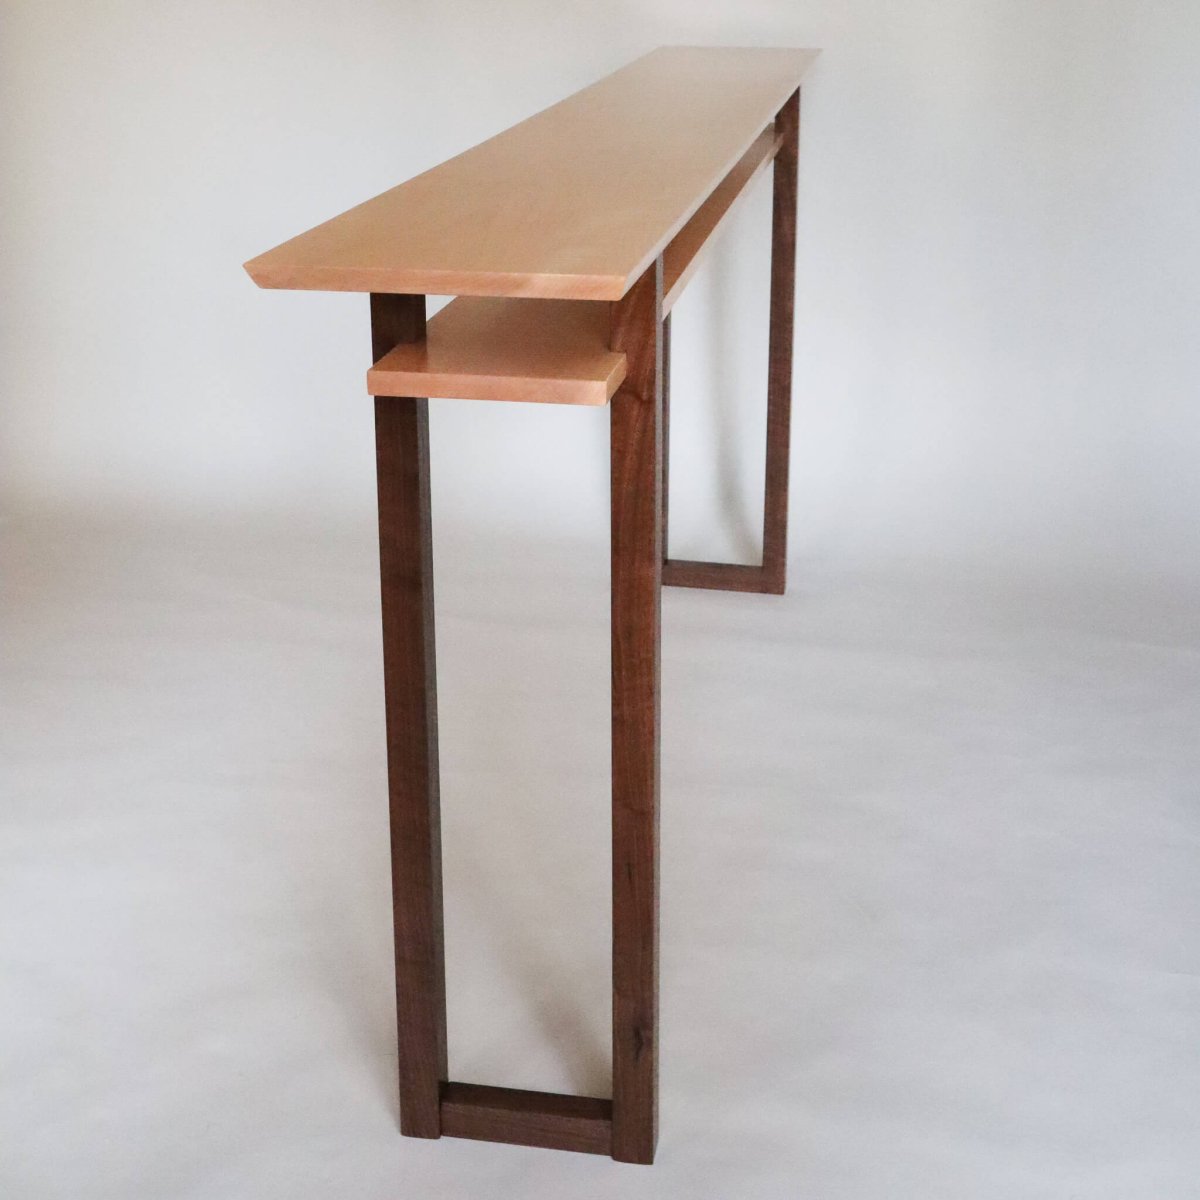 A long narrow console table for entryways by Mokuzai Furniture